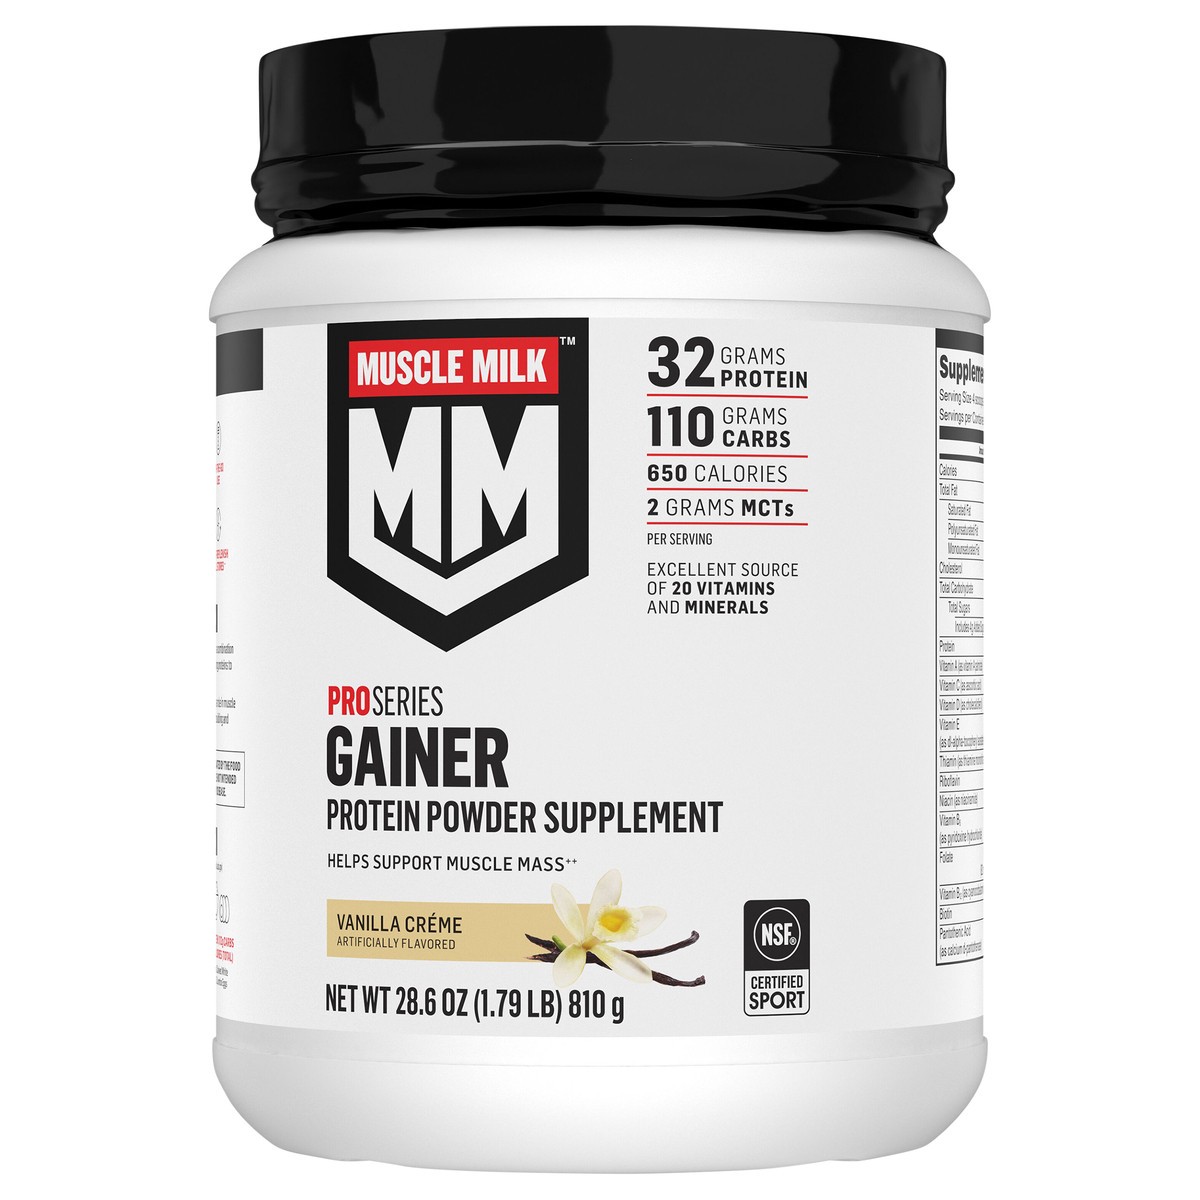 slide 1 of 7, Muscle Milk Pro Series Gainer Protein Powder Supplement Vanilla Creme Artificially Flavored 28.6 Oz, 28 oz